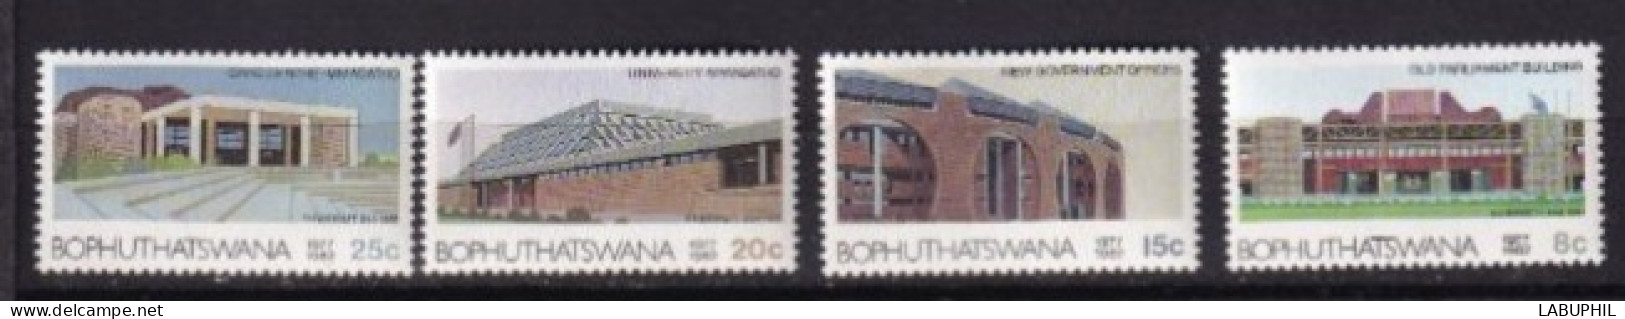 BOPHUYHATSWANA MNH 1982 - Bophuthatswana